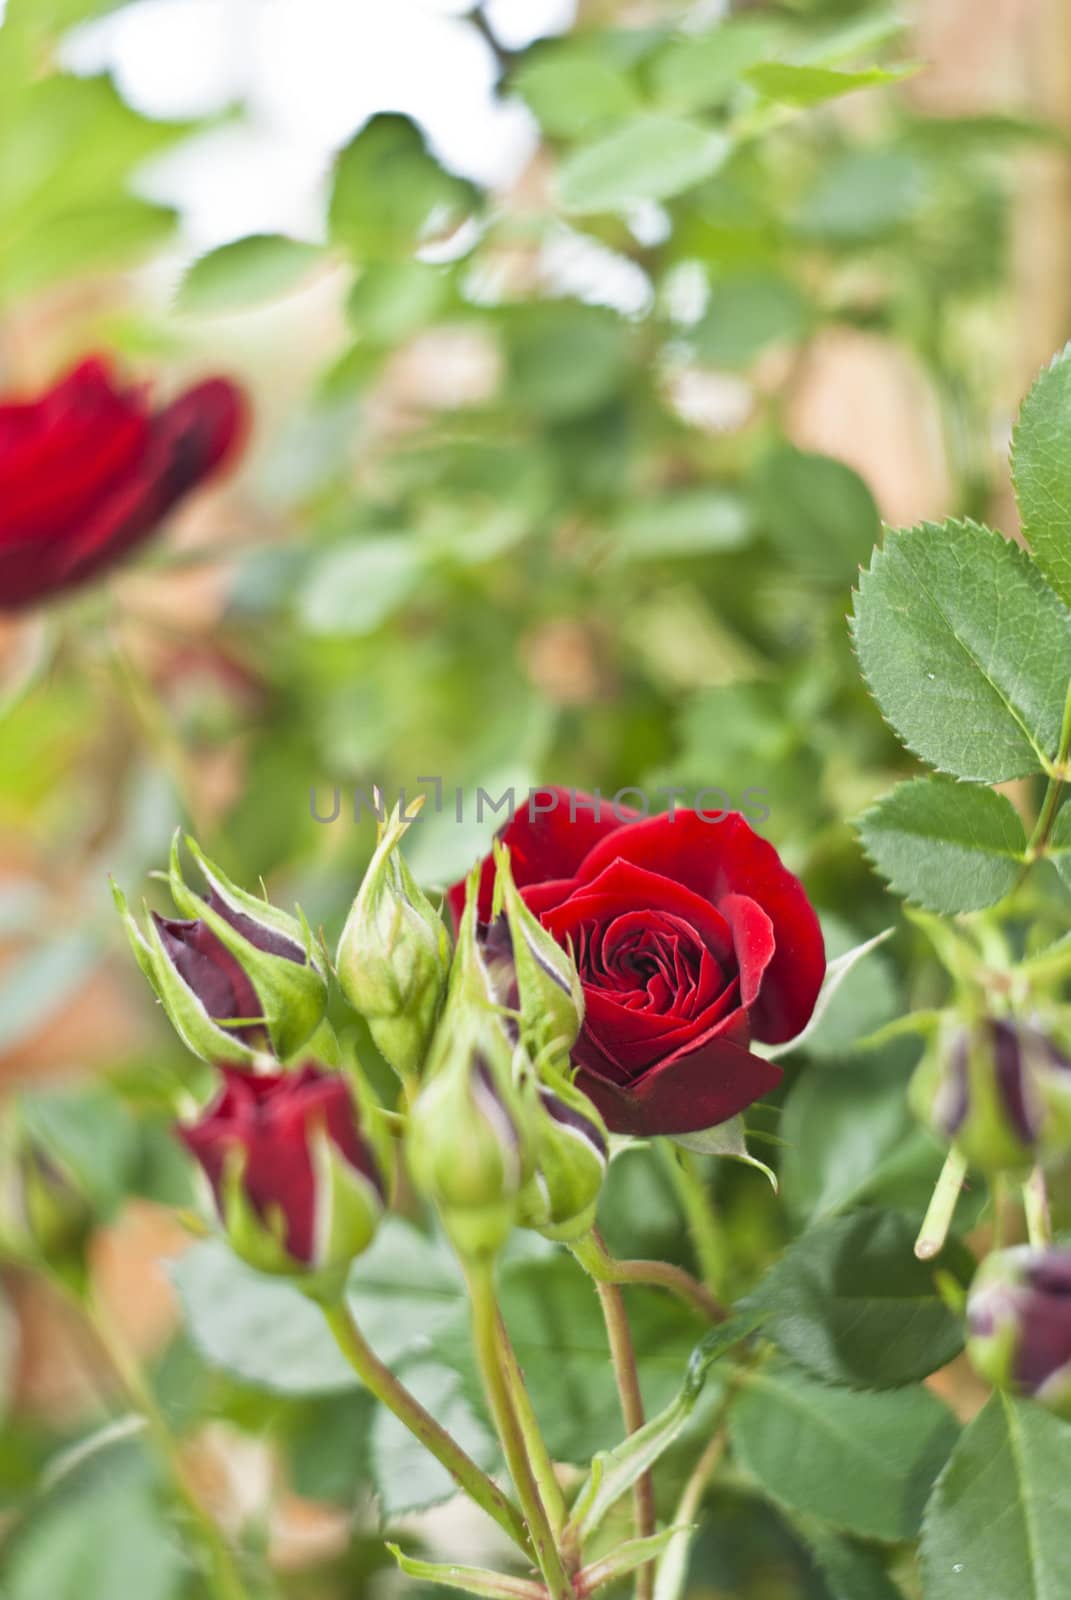 Red rosebud in the garden by gandolfocannatella